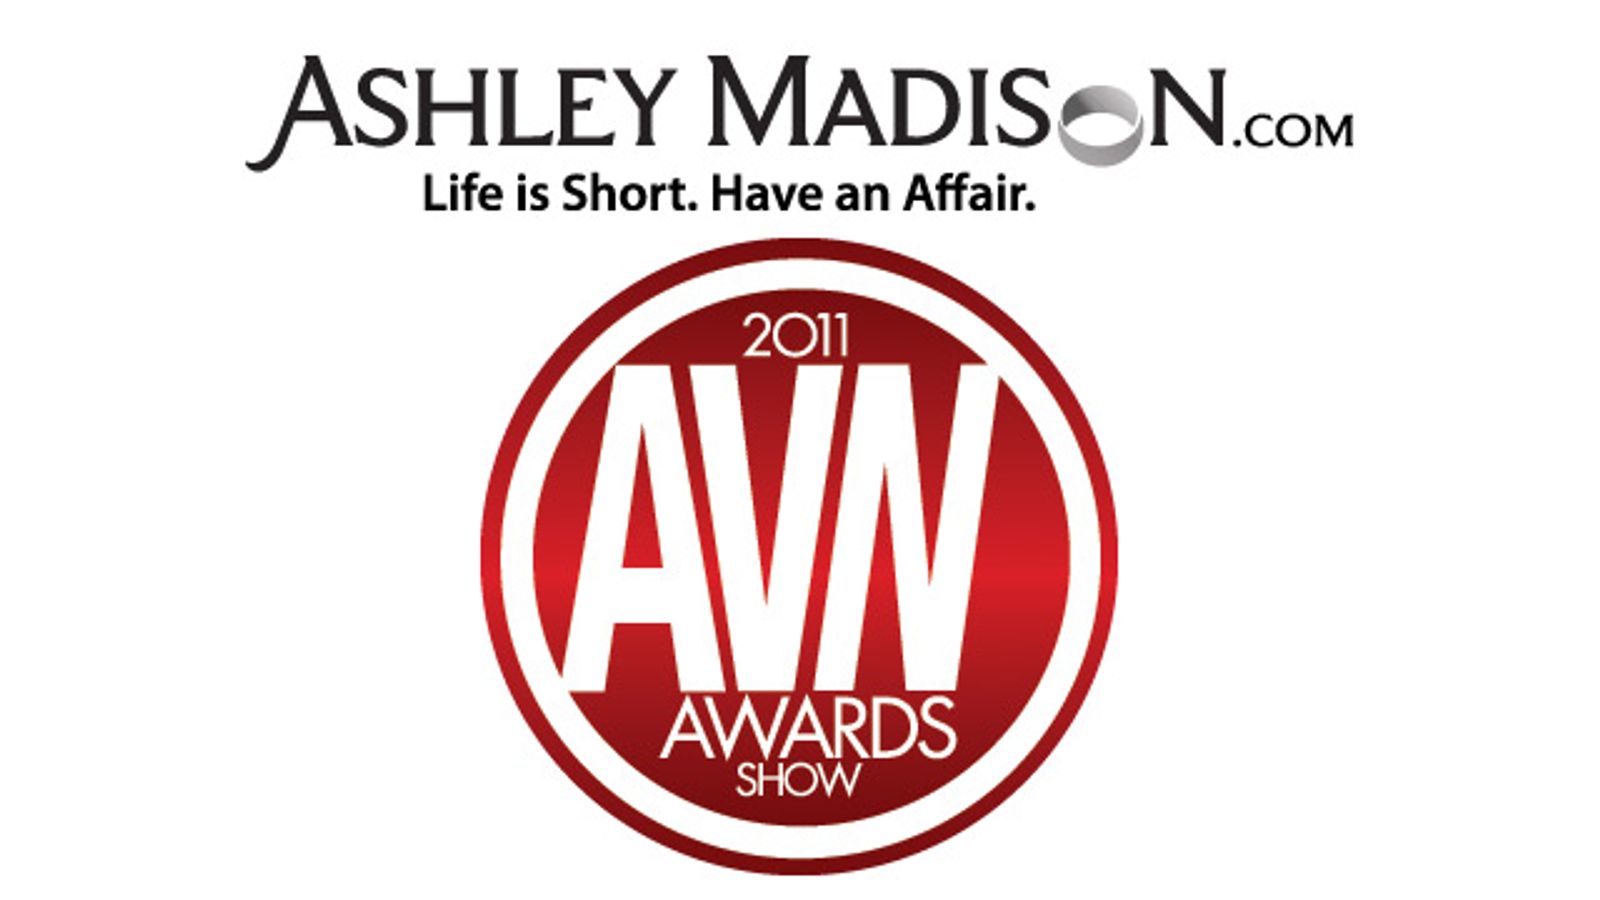 2011 AVN Awards Show to Feature Fan Favorite Categories